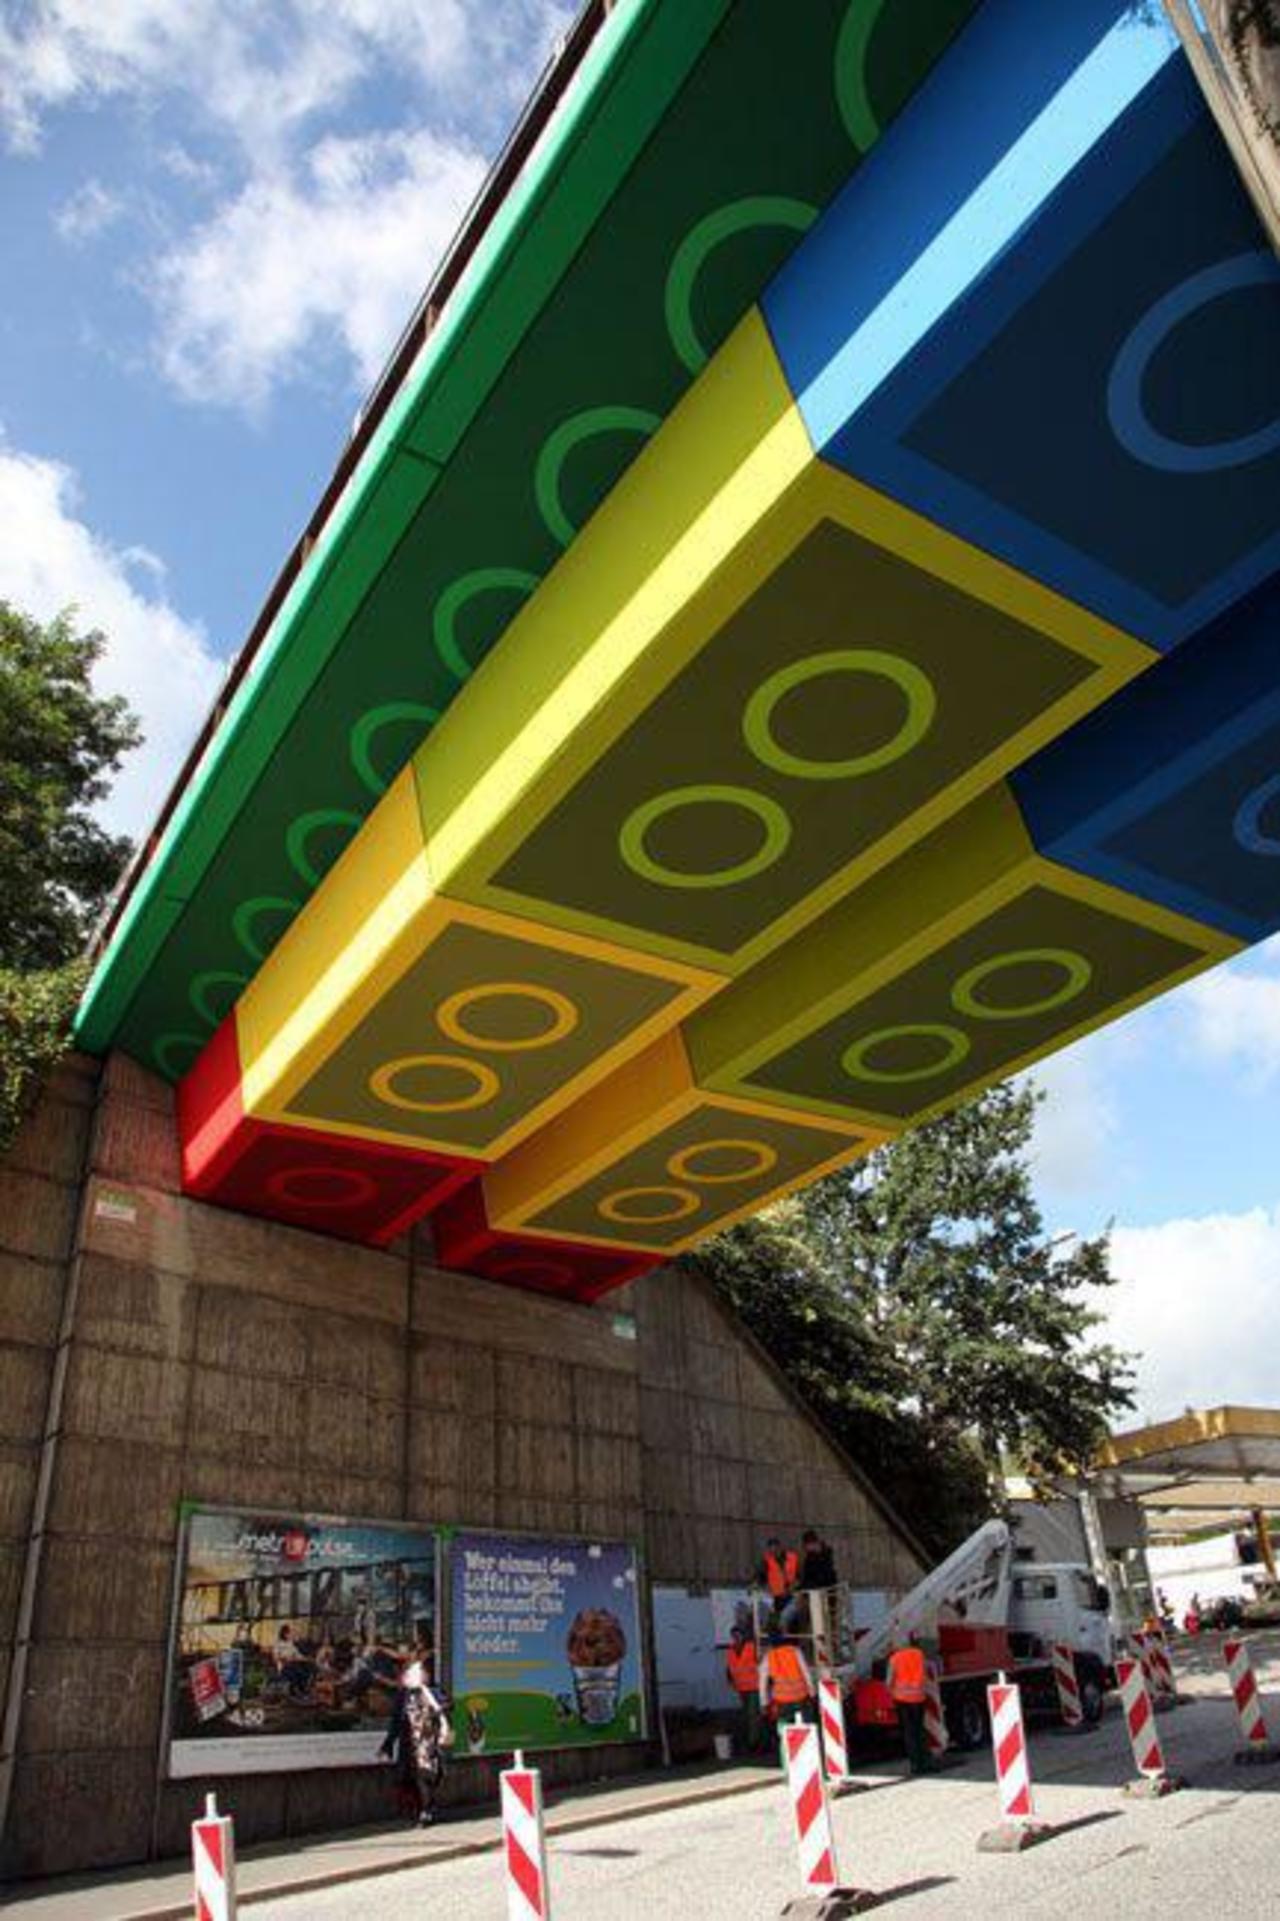 #switch #LEGO into #streetart #germany #bedifferent #graffiti #arte #art http://t.co/858gmsknJq